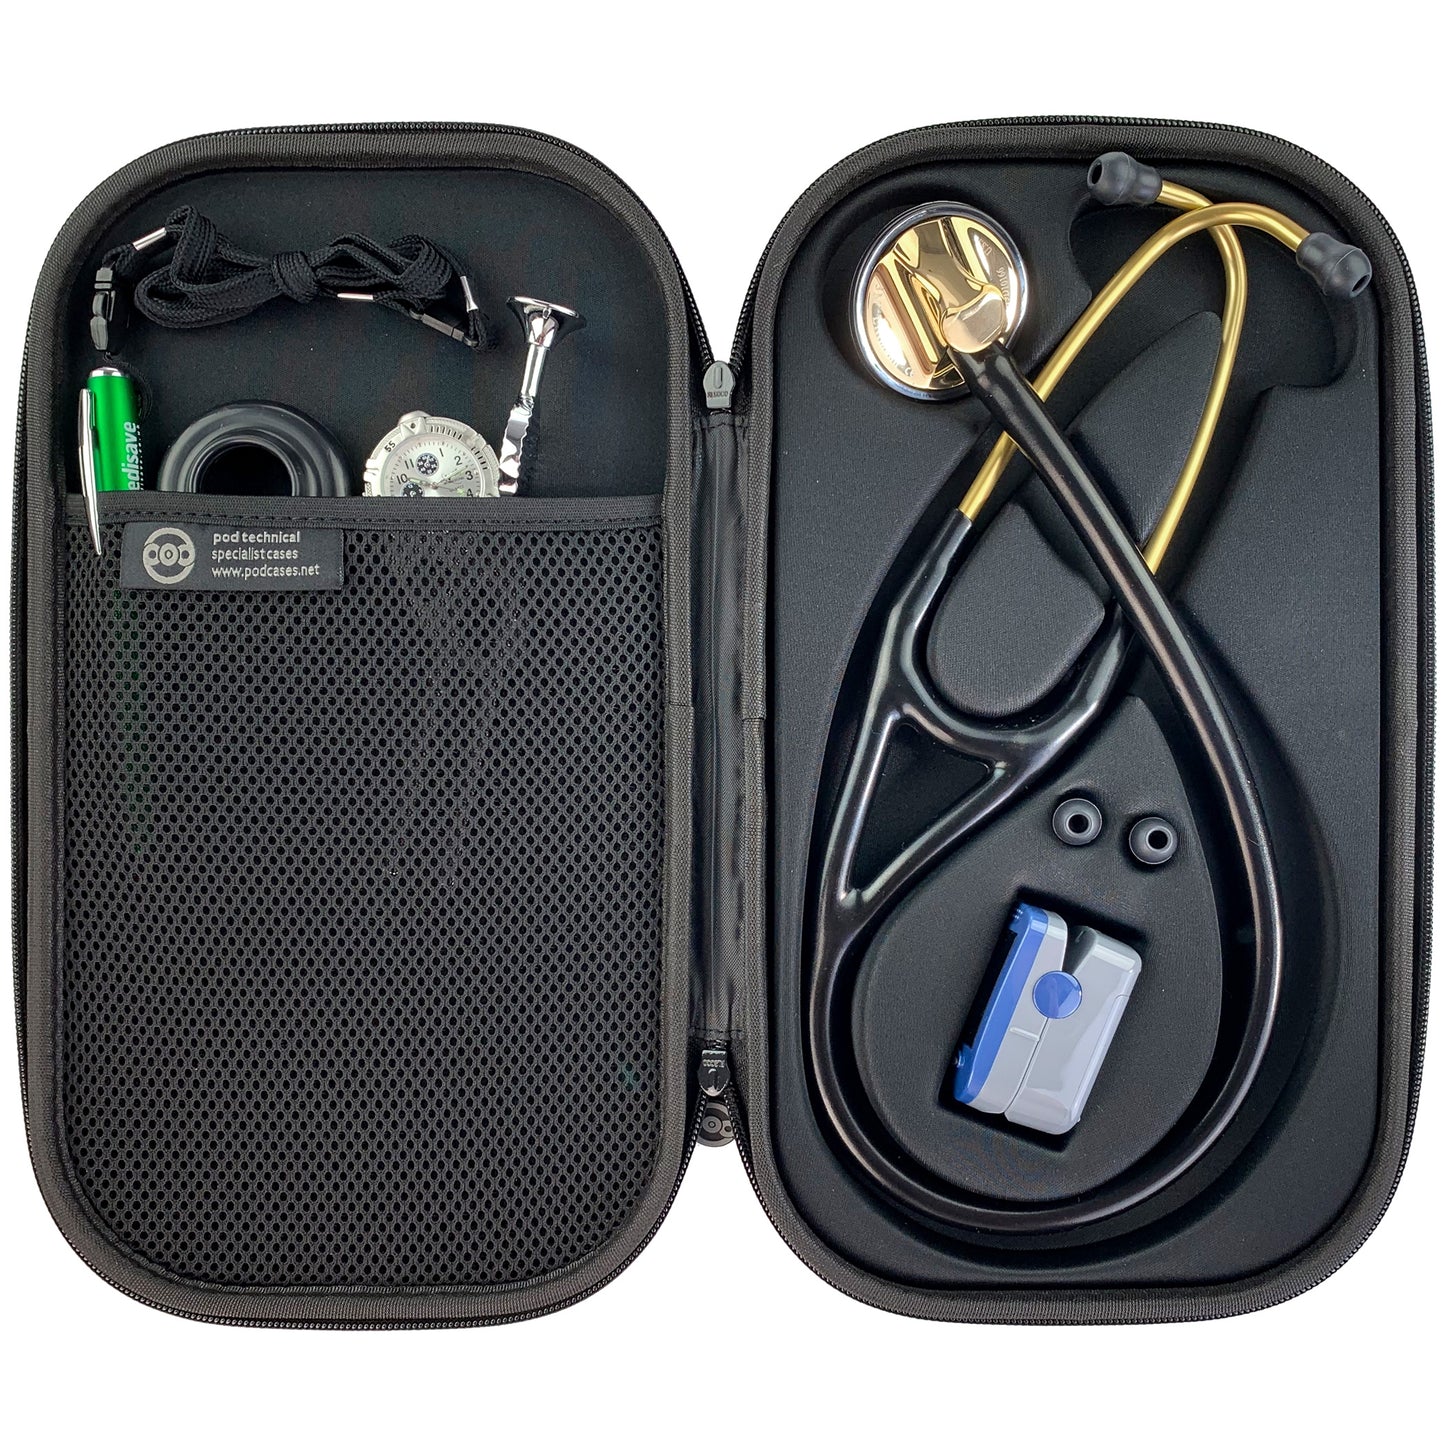 Pod Technical Cardiopod II Stethoscope Case for all Littmann Stethoscopes - Carbon Pod Technical